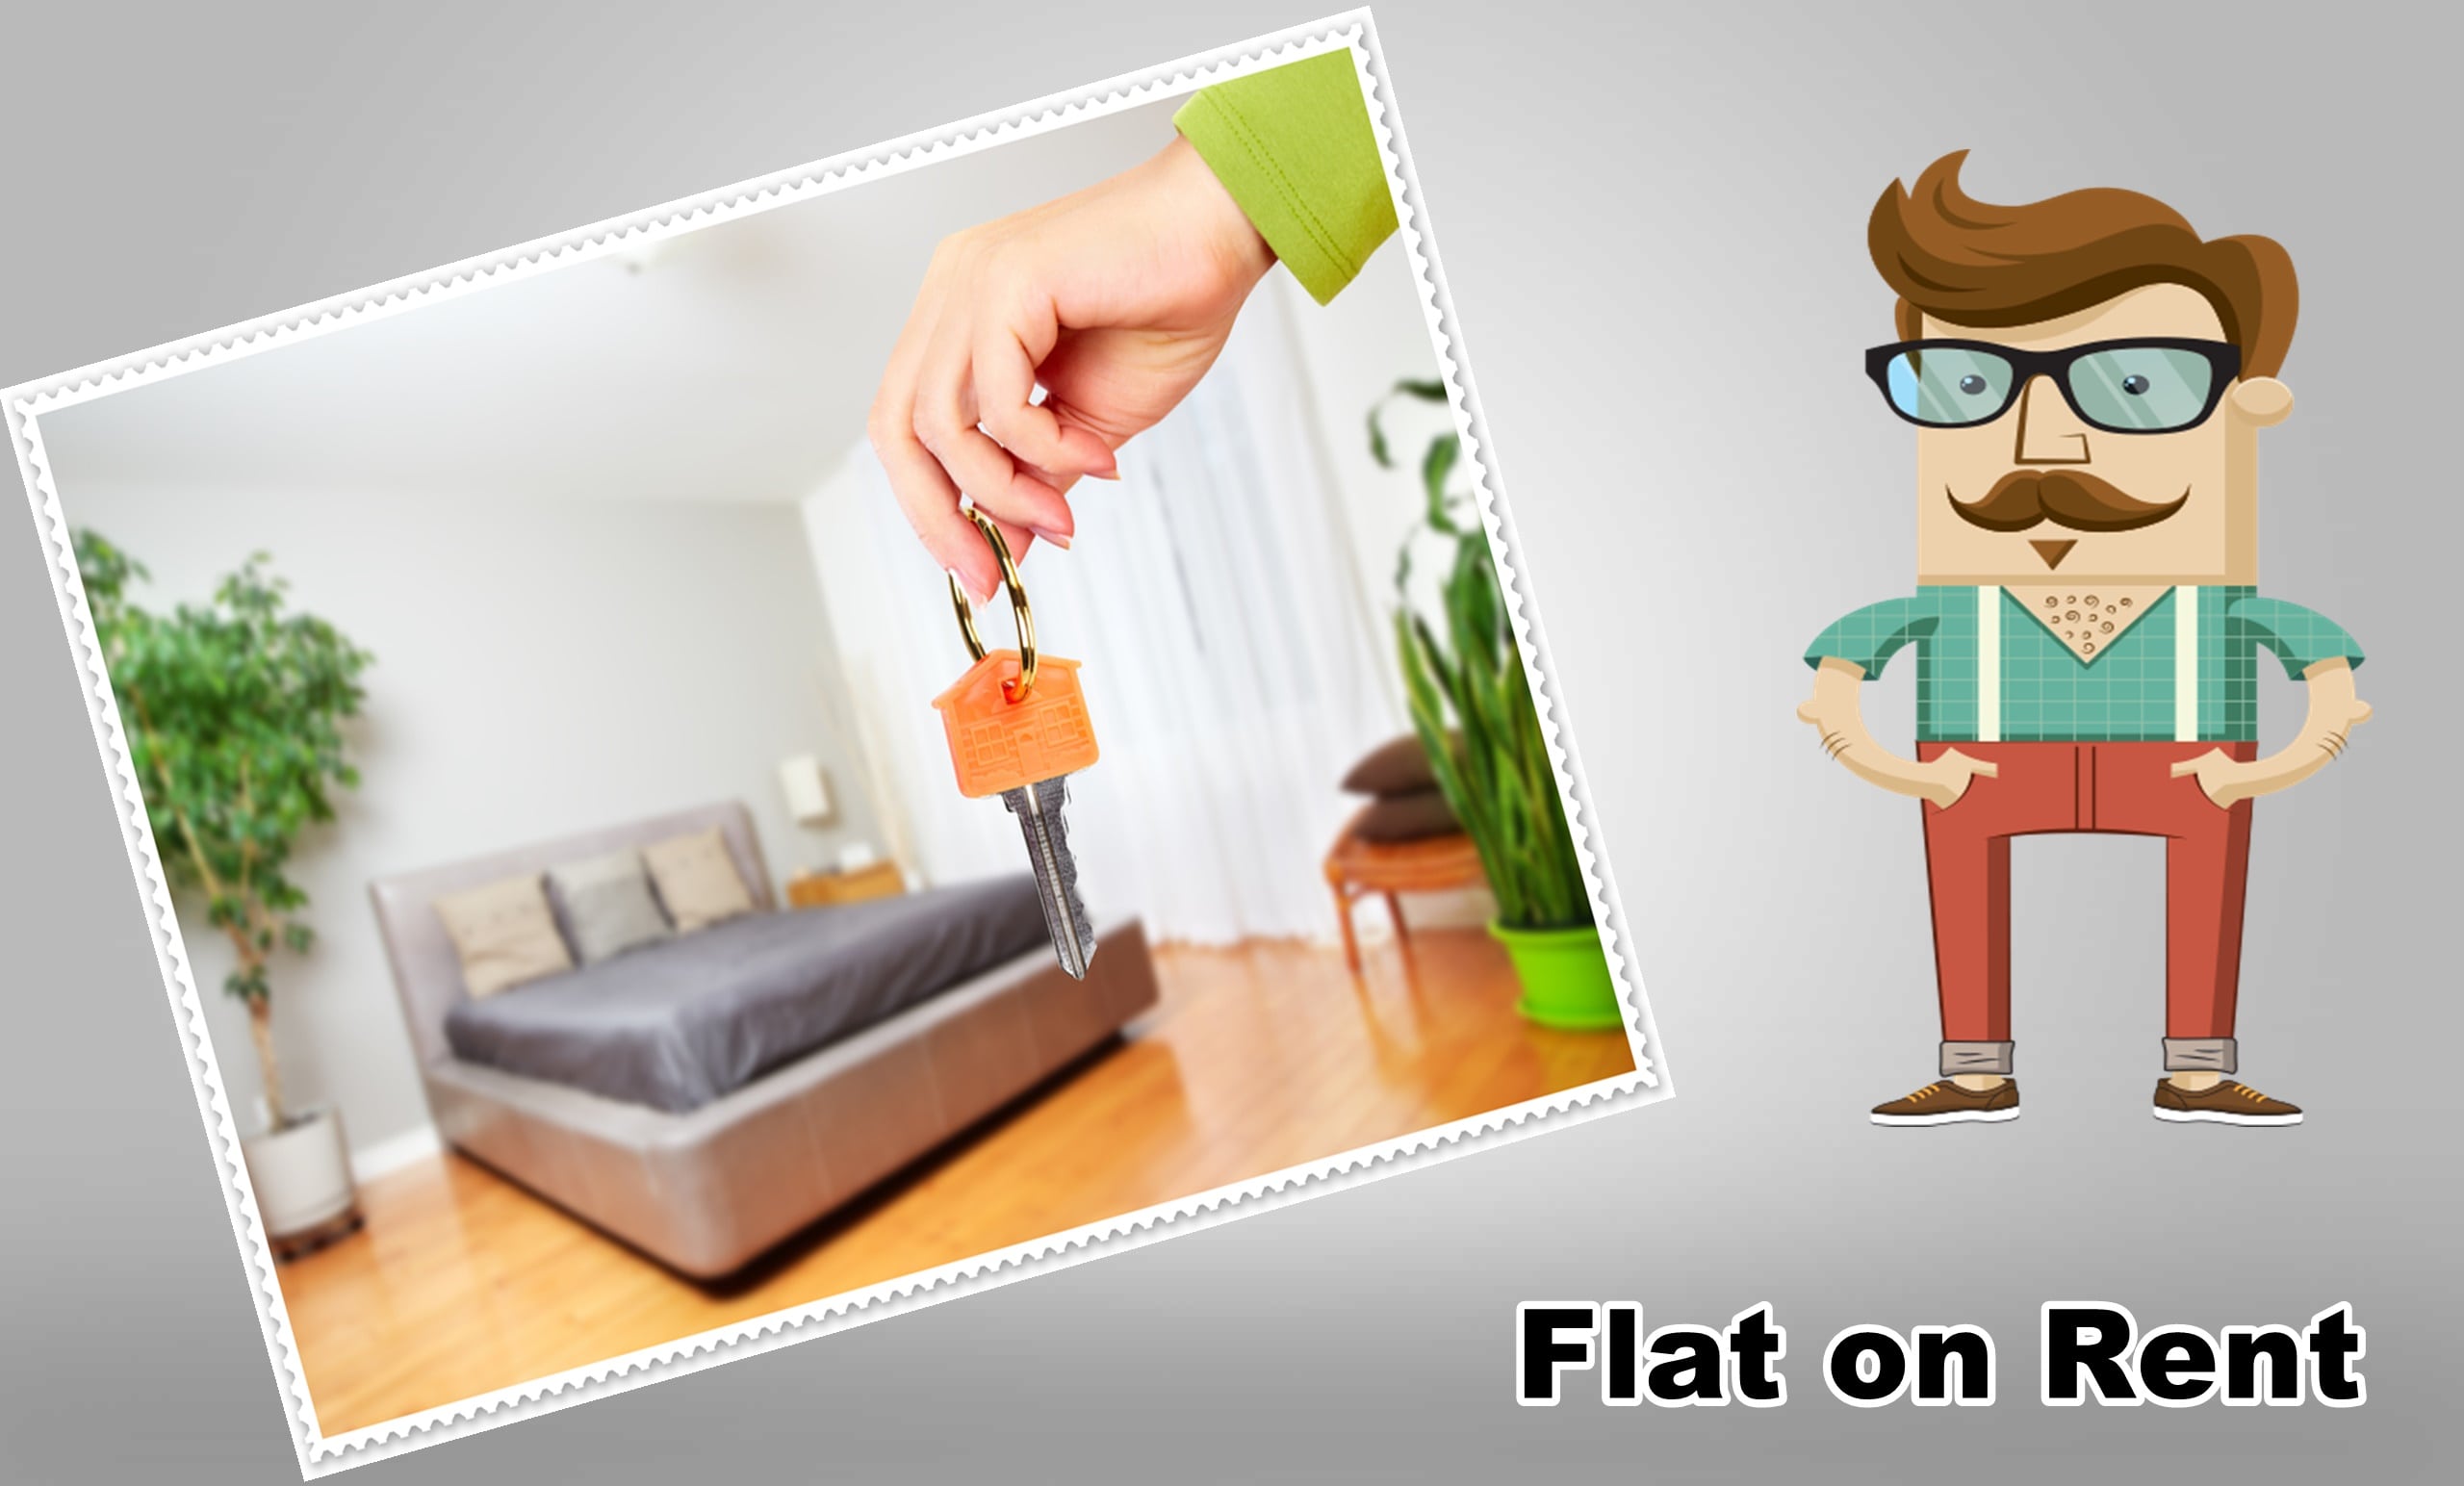 New flatter. Rent a Flat. A Flat to rent. Renting a Flat Dialogue. Rent or buy a Flat.